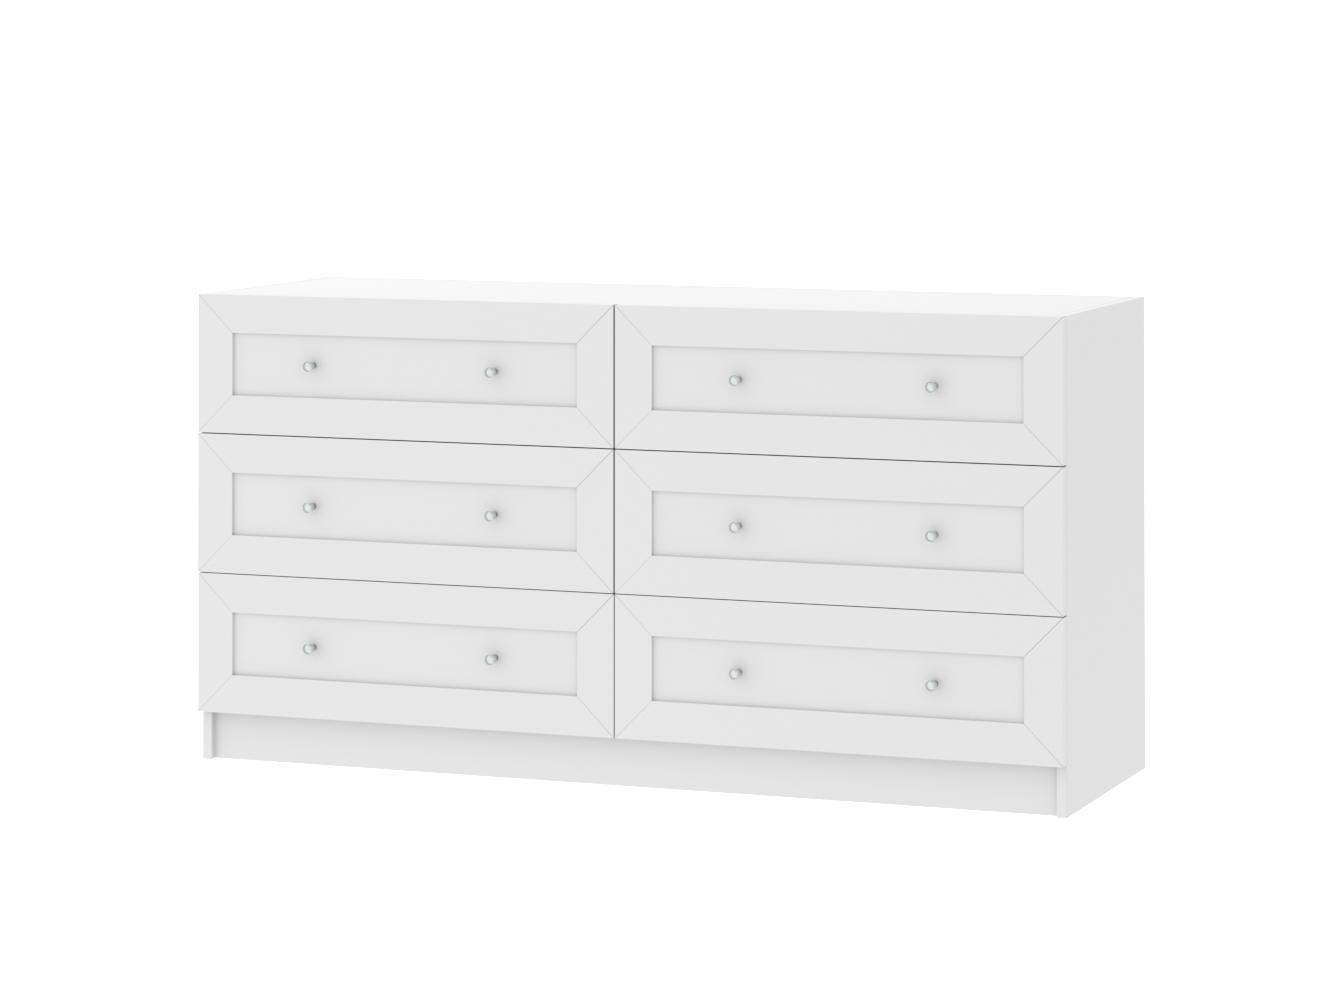 Изображение товара Комод Билли 219 white ИКЕА (IKEA), 140x45x77 см на сайте adeta.ru